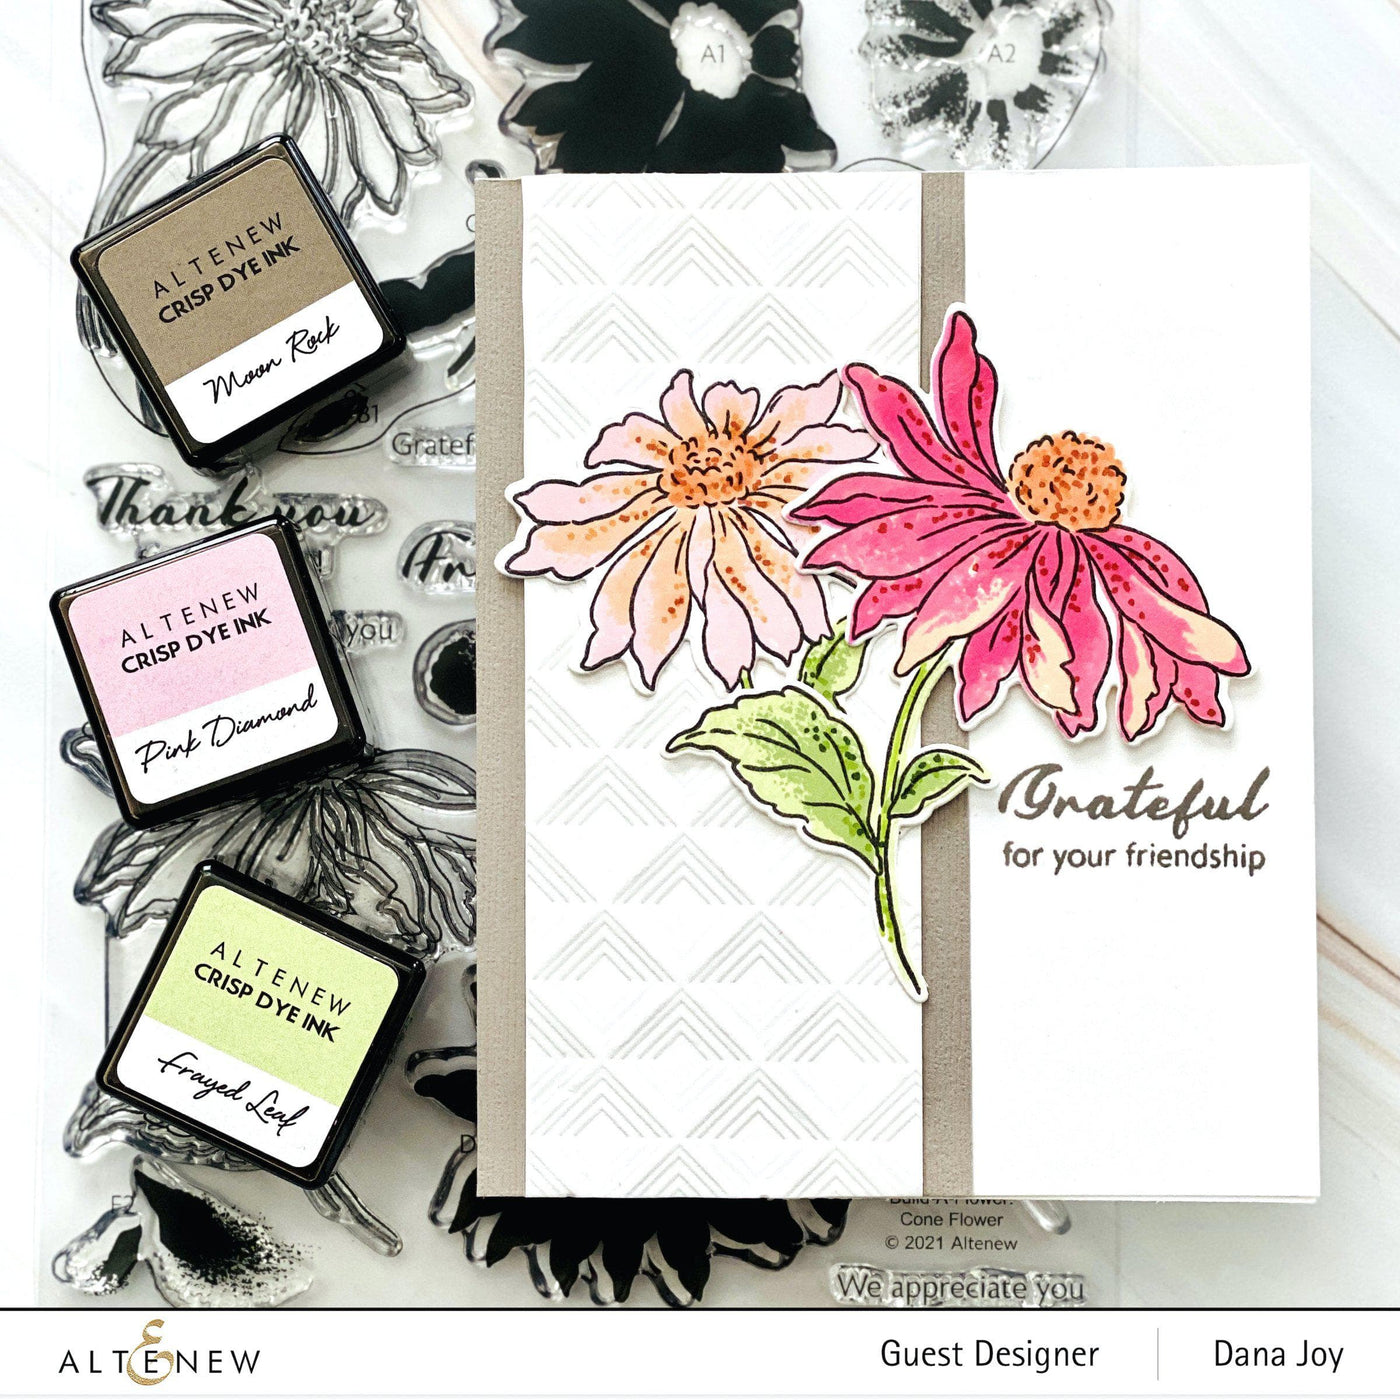 Build-A-Flower Set Build-A-Flower: Coneflower Layering Stamp & Die Set